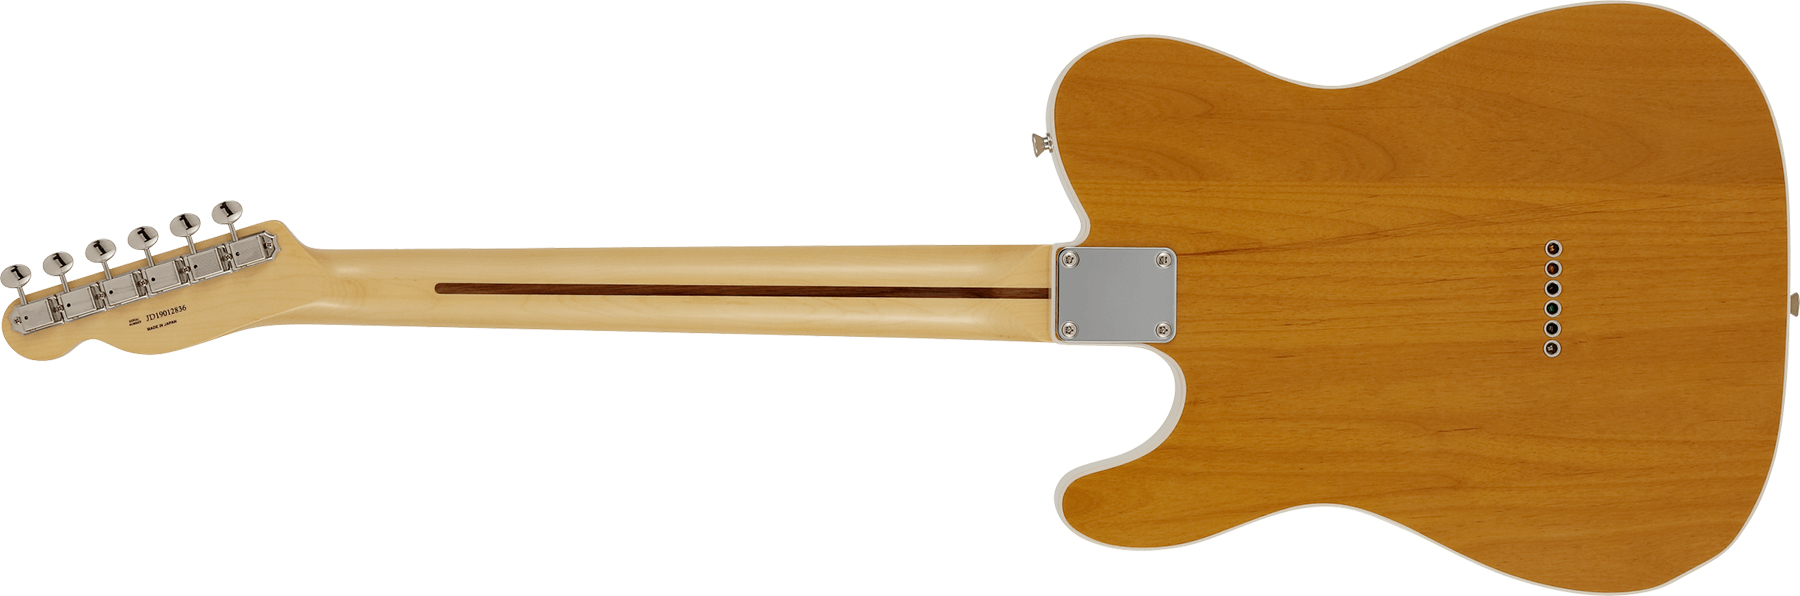 Fender Tele Mhak  Art Gallery Jap Hs Mn - Natural - Guitare Électrique Forme Tel - Variation 1